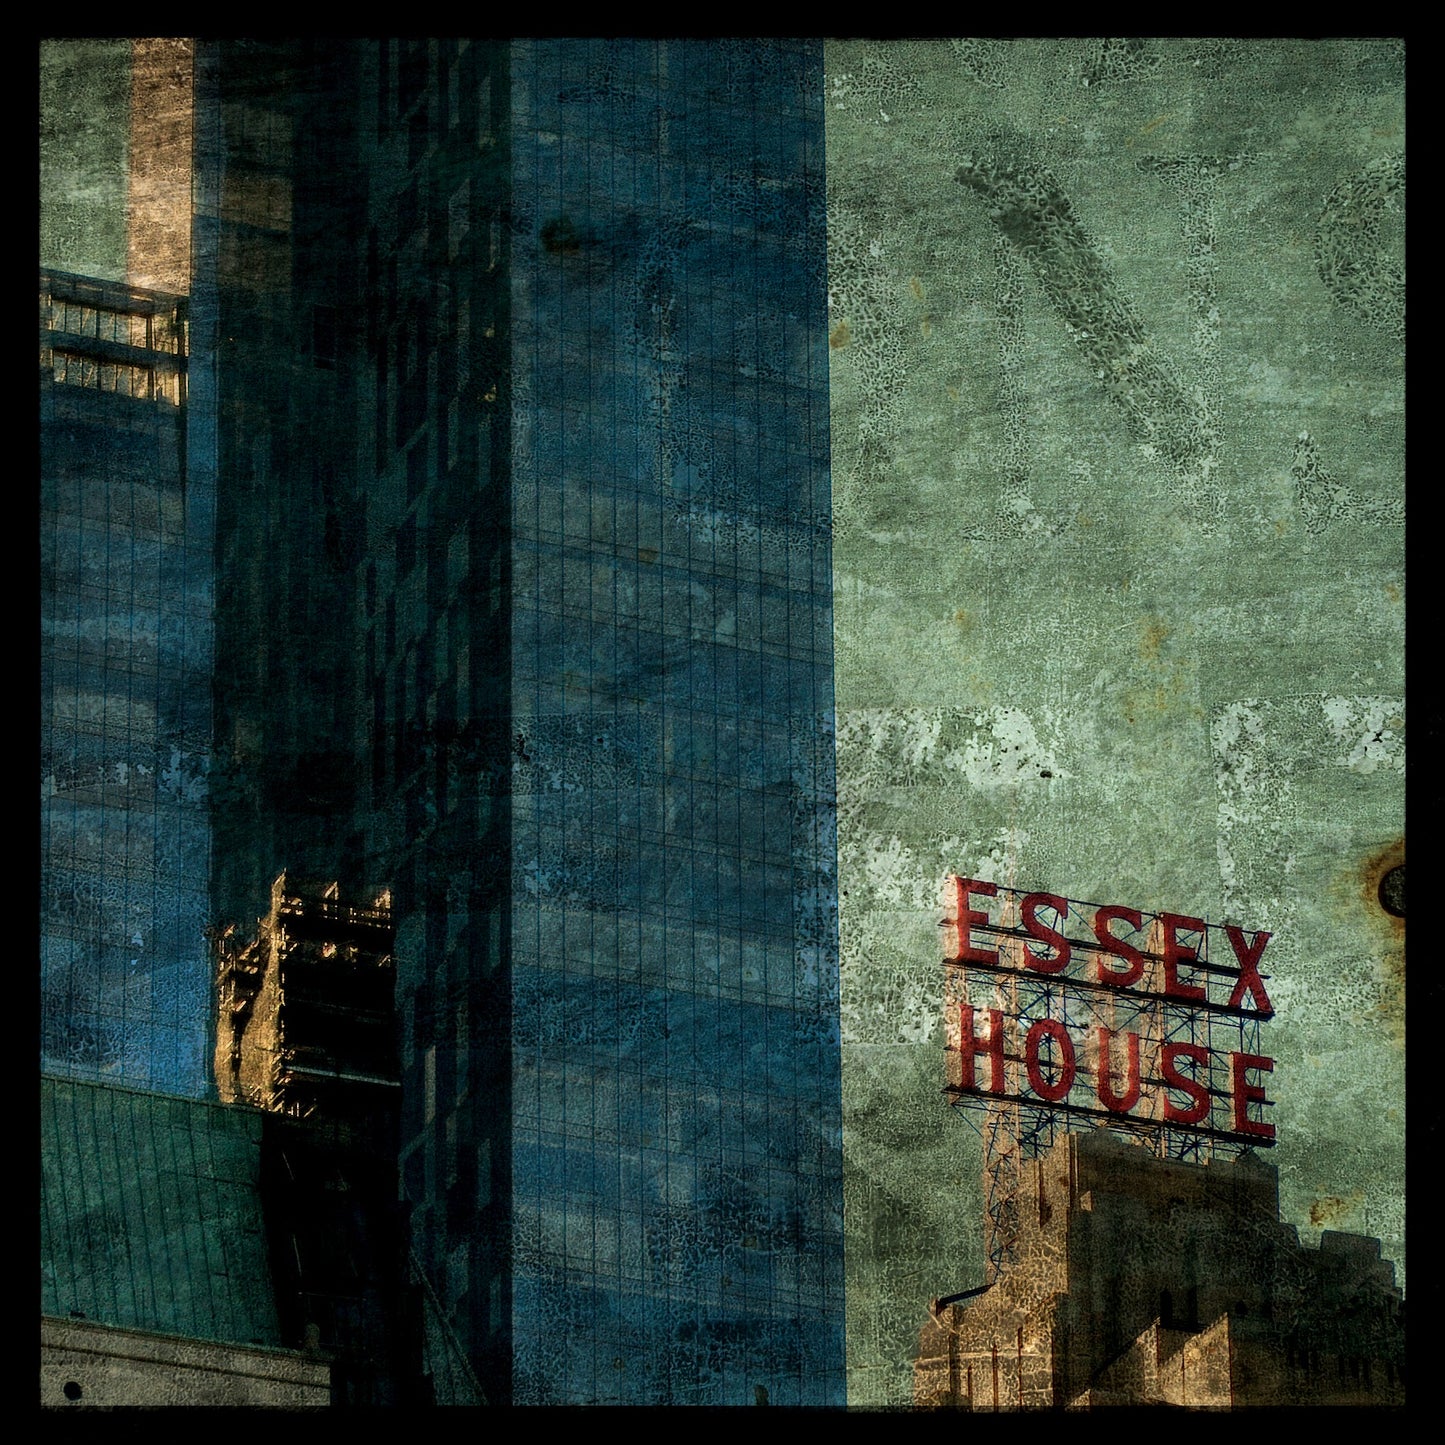 Essex House Photograph